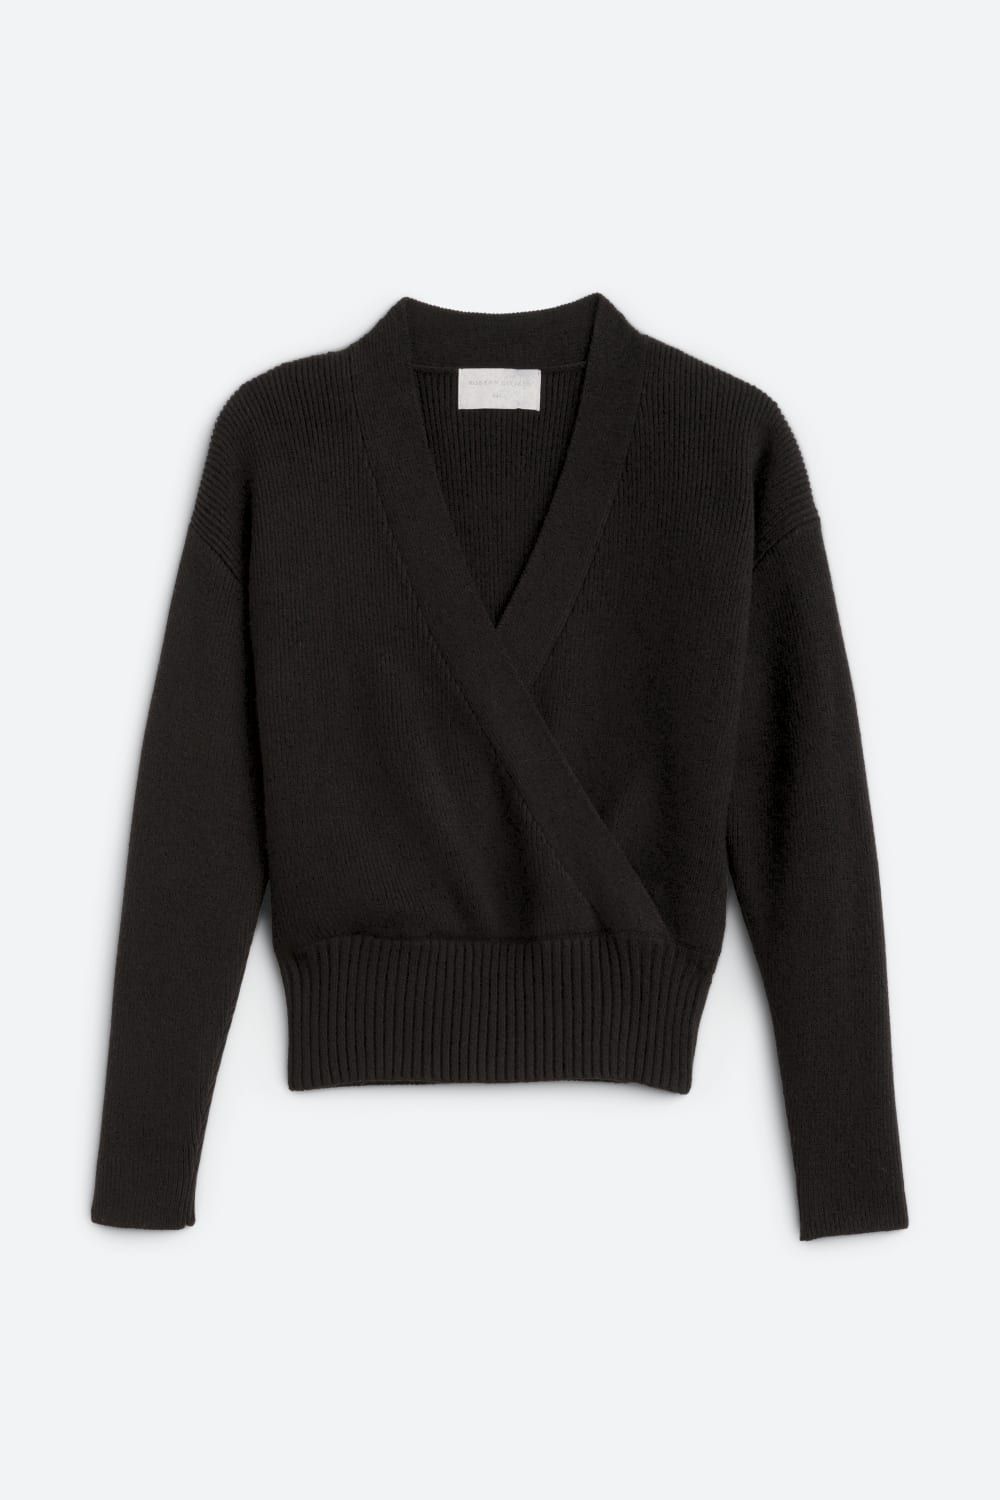 Marlowe V-Neck Cropped Sweater | Stitch Fix